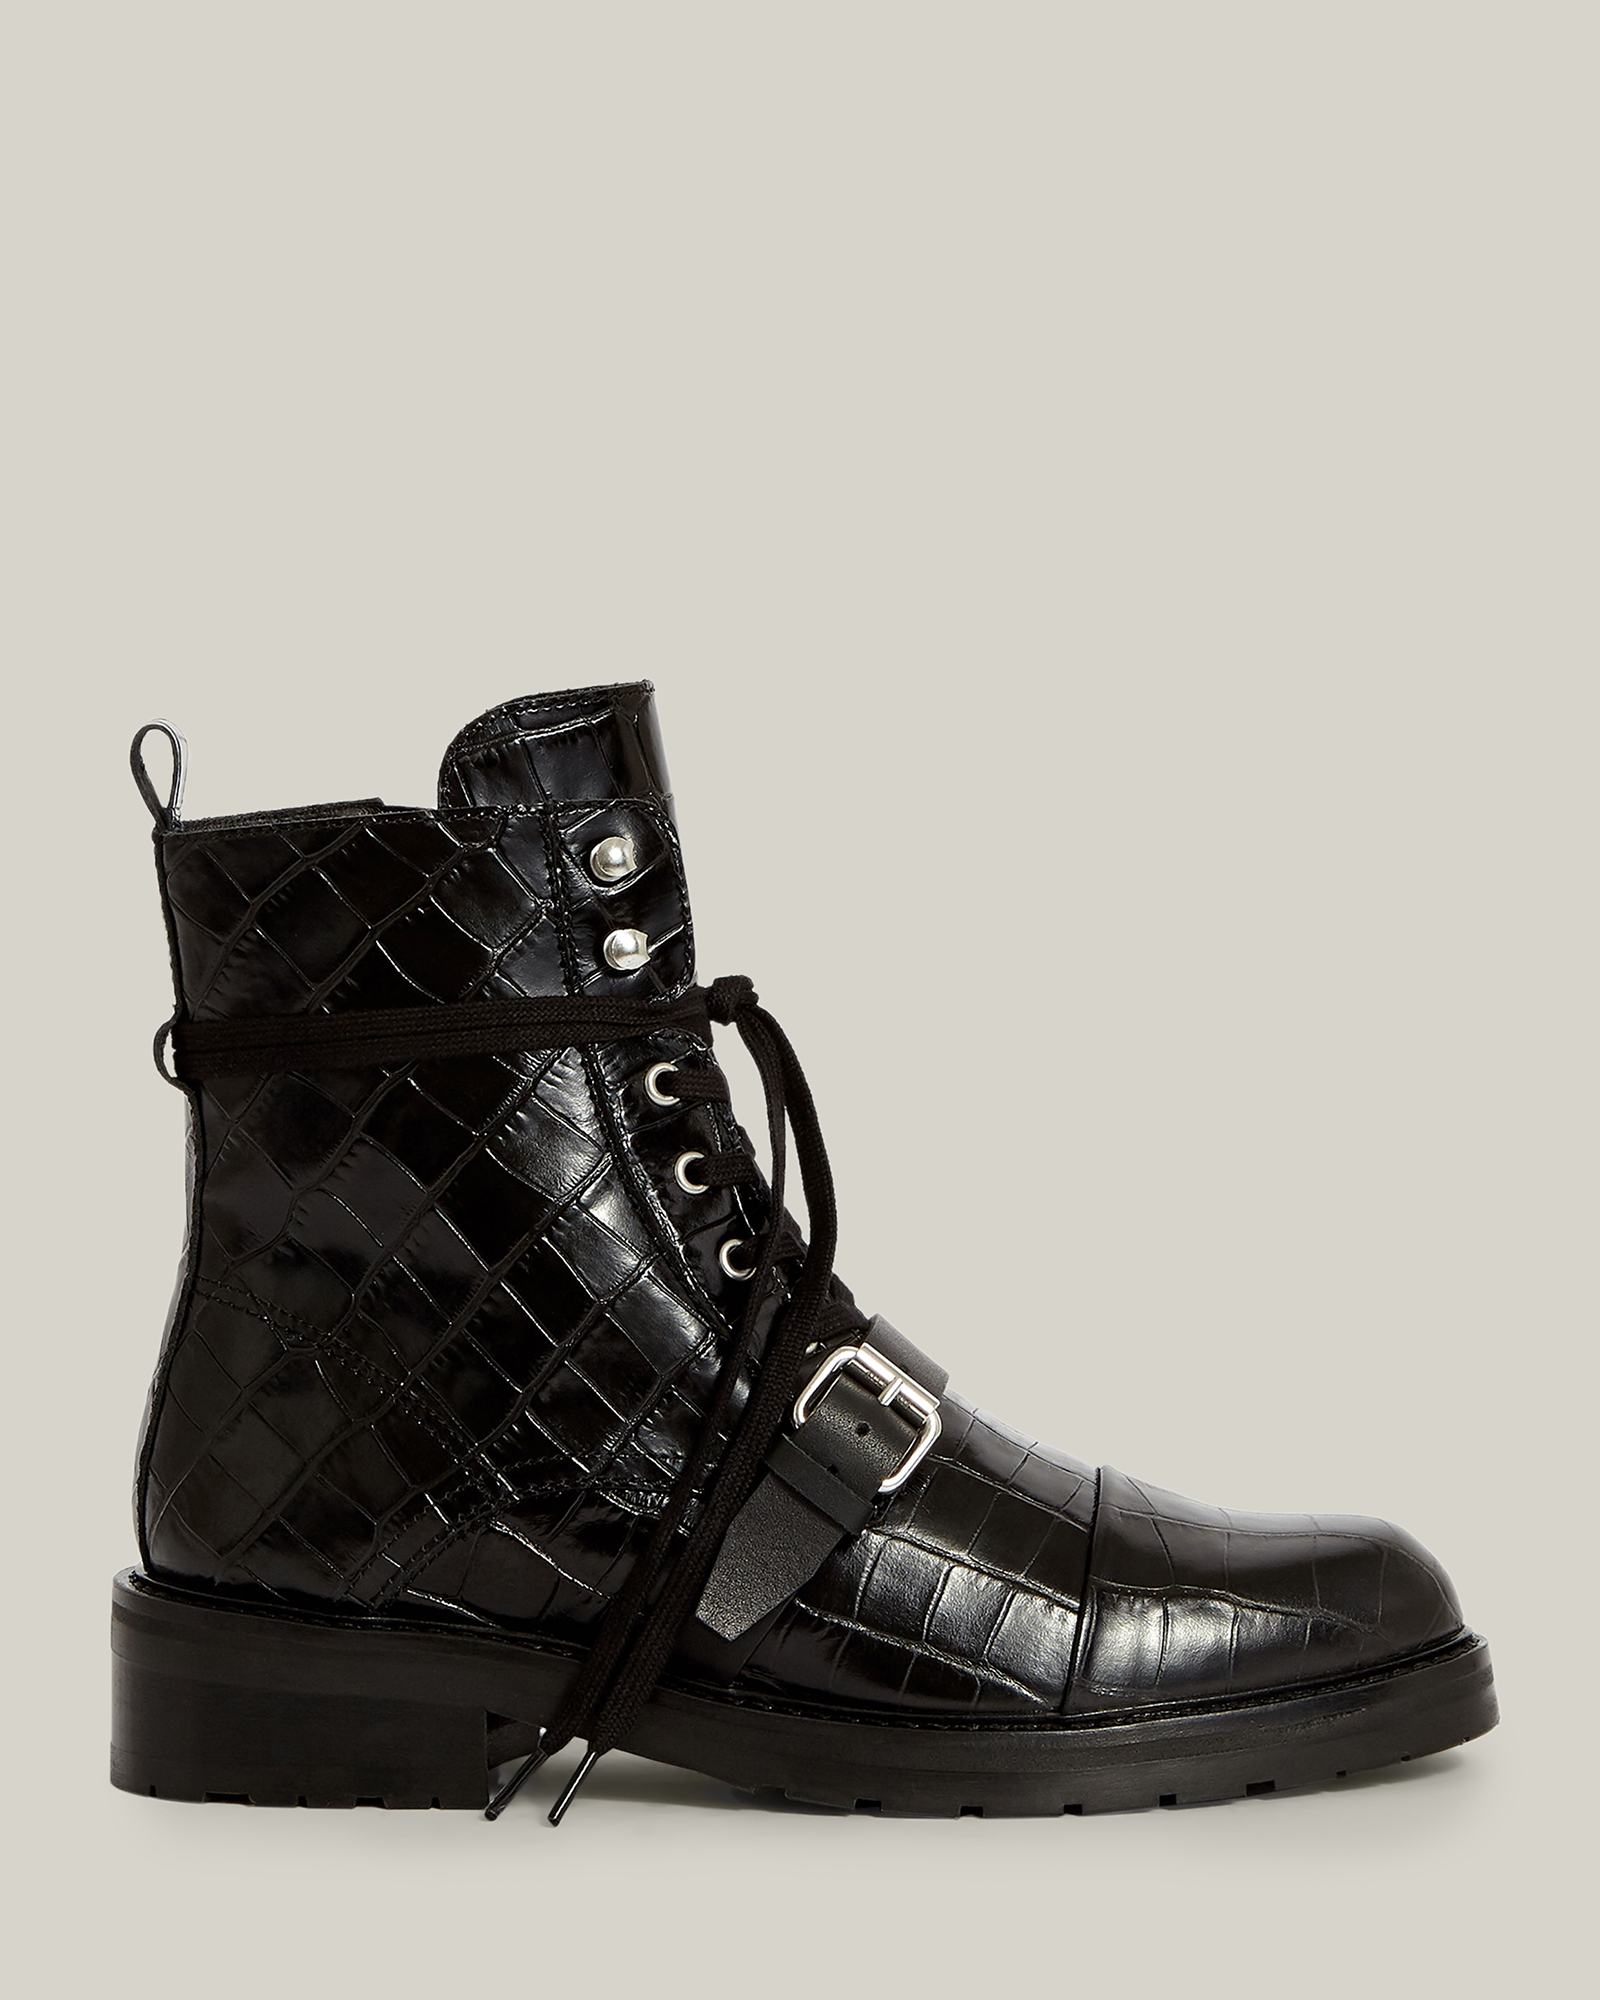 AllSaints Women's Leather Crocodile Print Round Toe Donita Boots, Black, Size: UK 3/US 5/EU 36